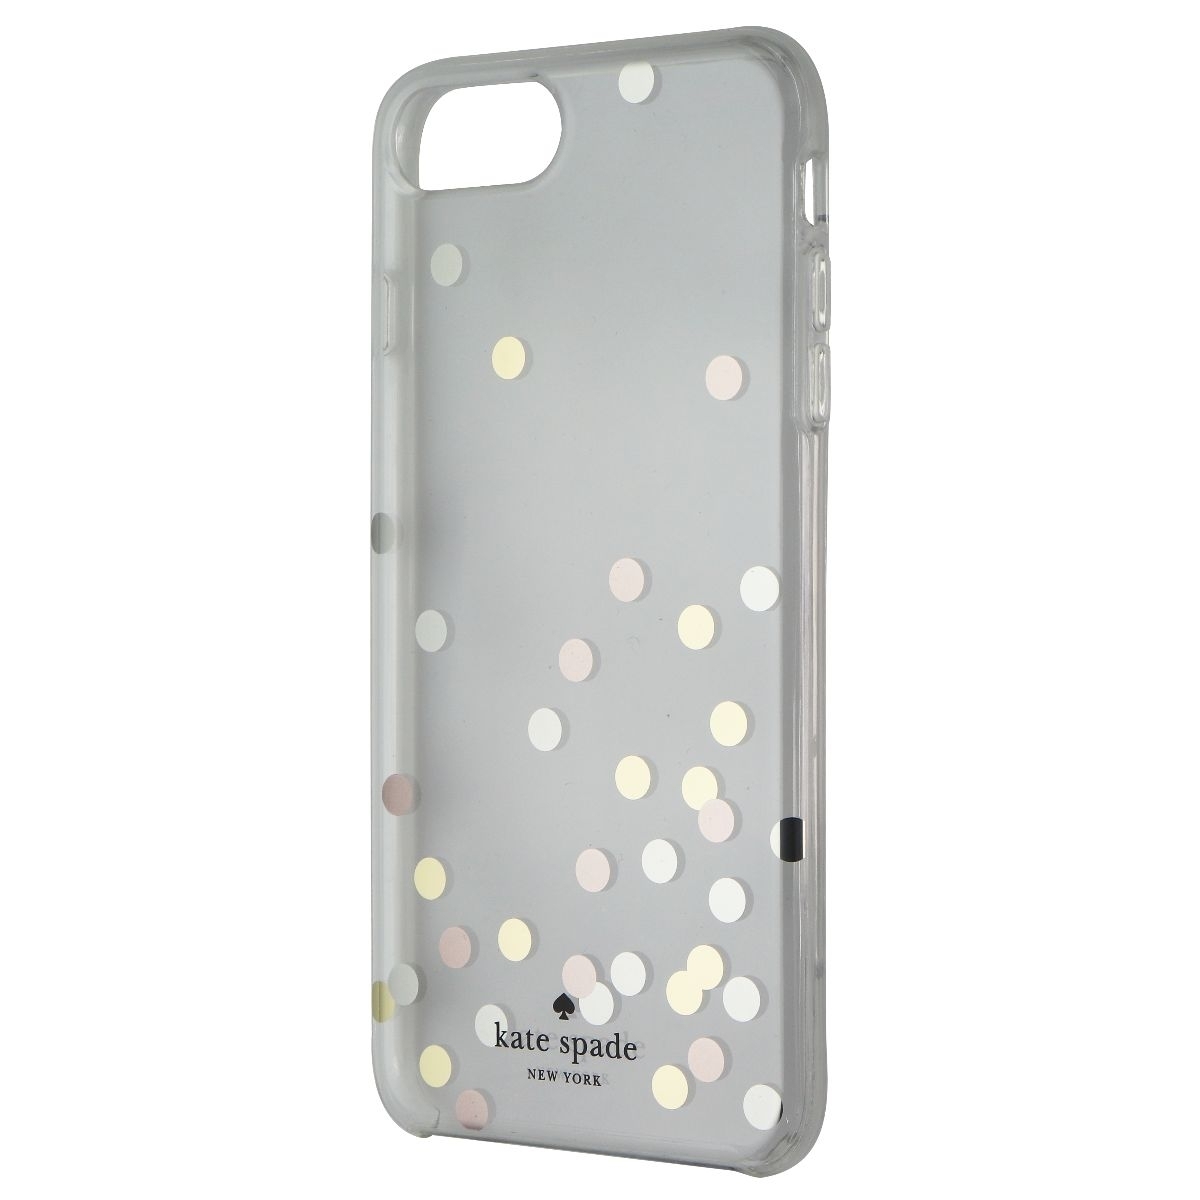 Kate Spade Protective Hardshell Case For IPhone 8 Plus/7 Plus - Metallic Dots (Refurbished)